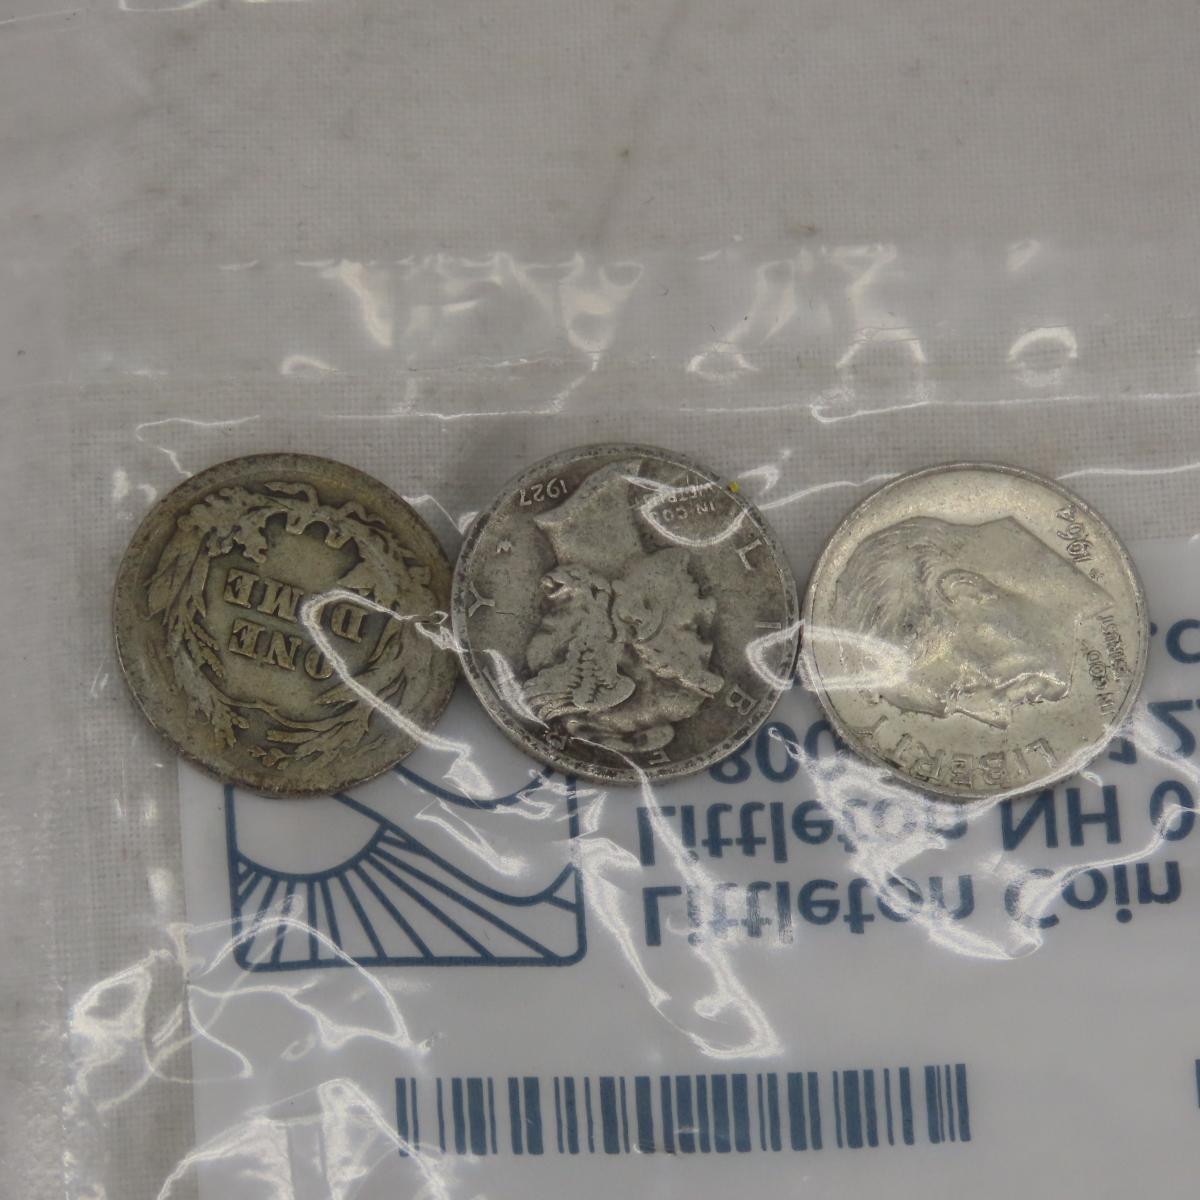 6 US Dime Type Sets Littleton Coin co